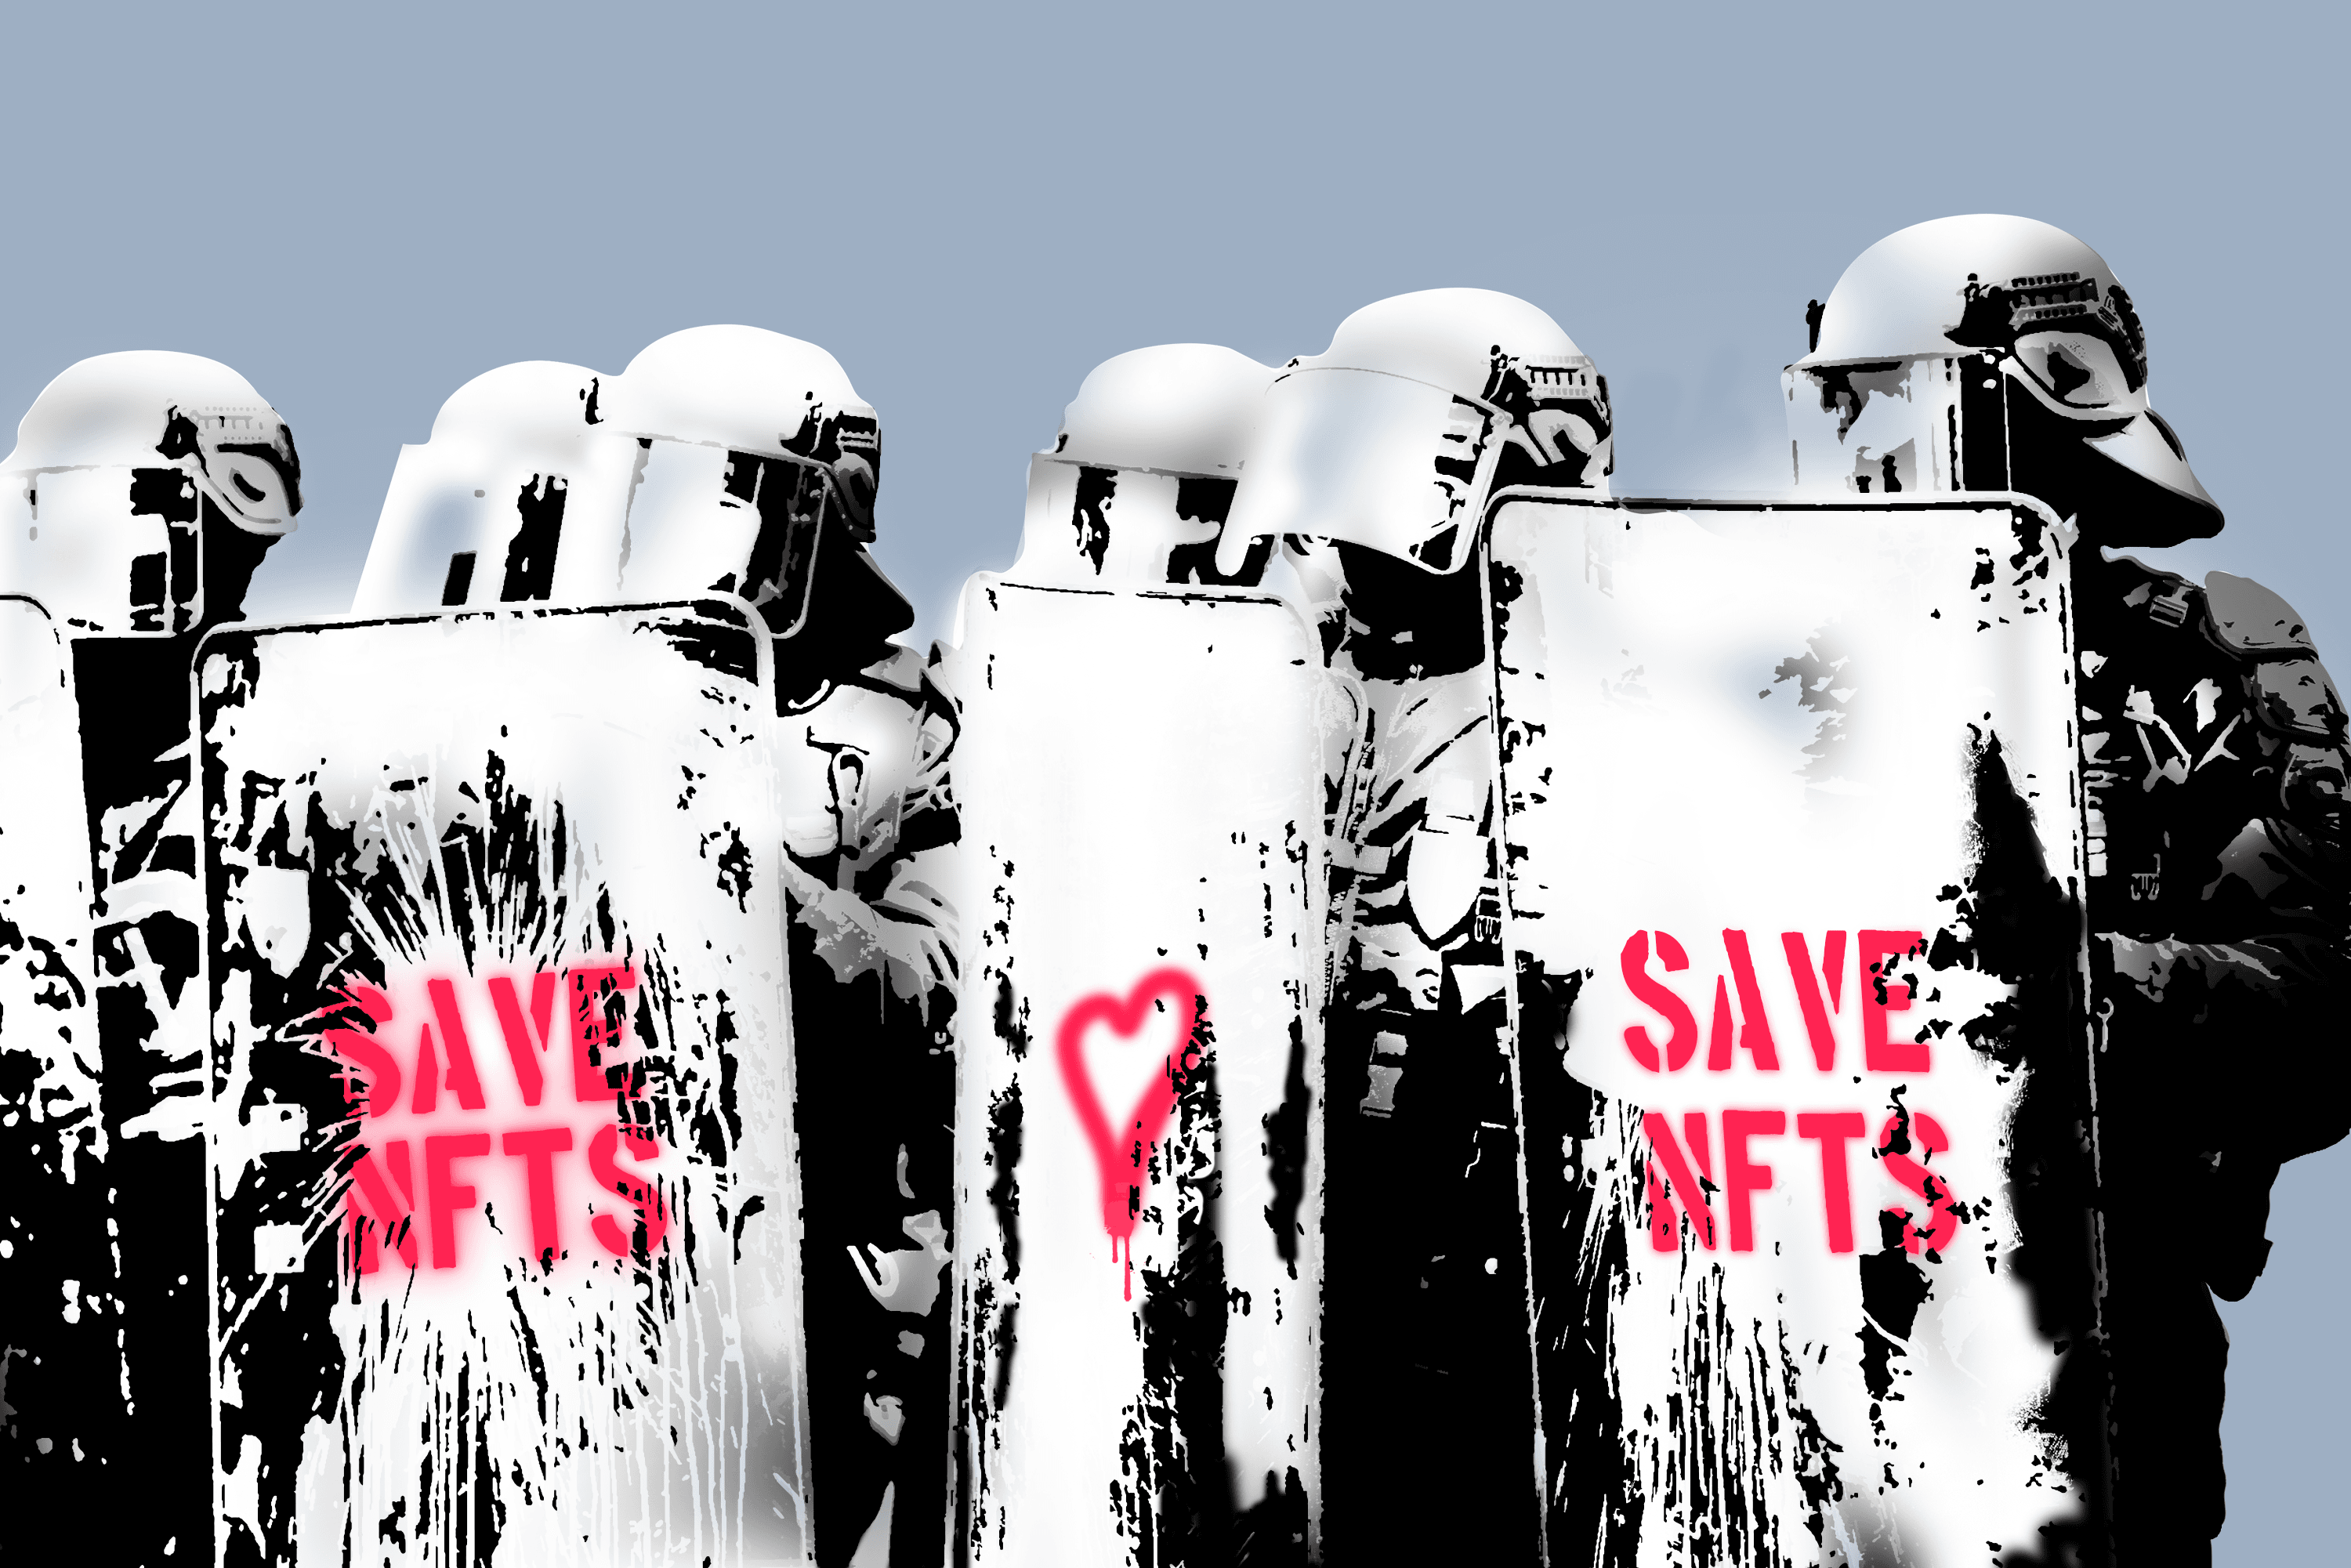 Save NFT's?